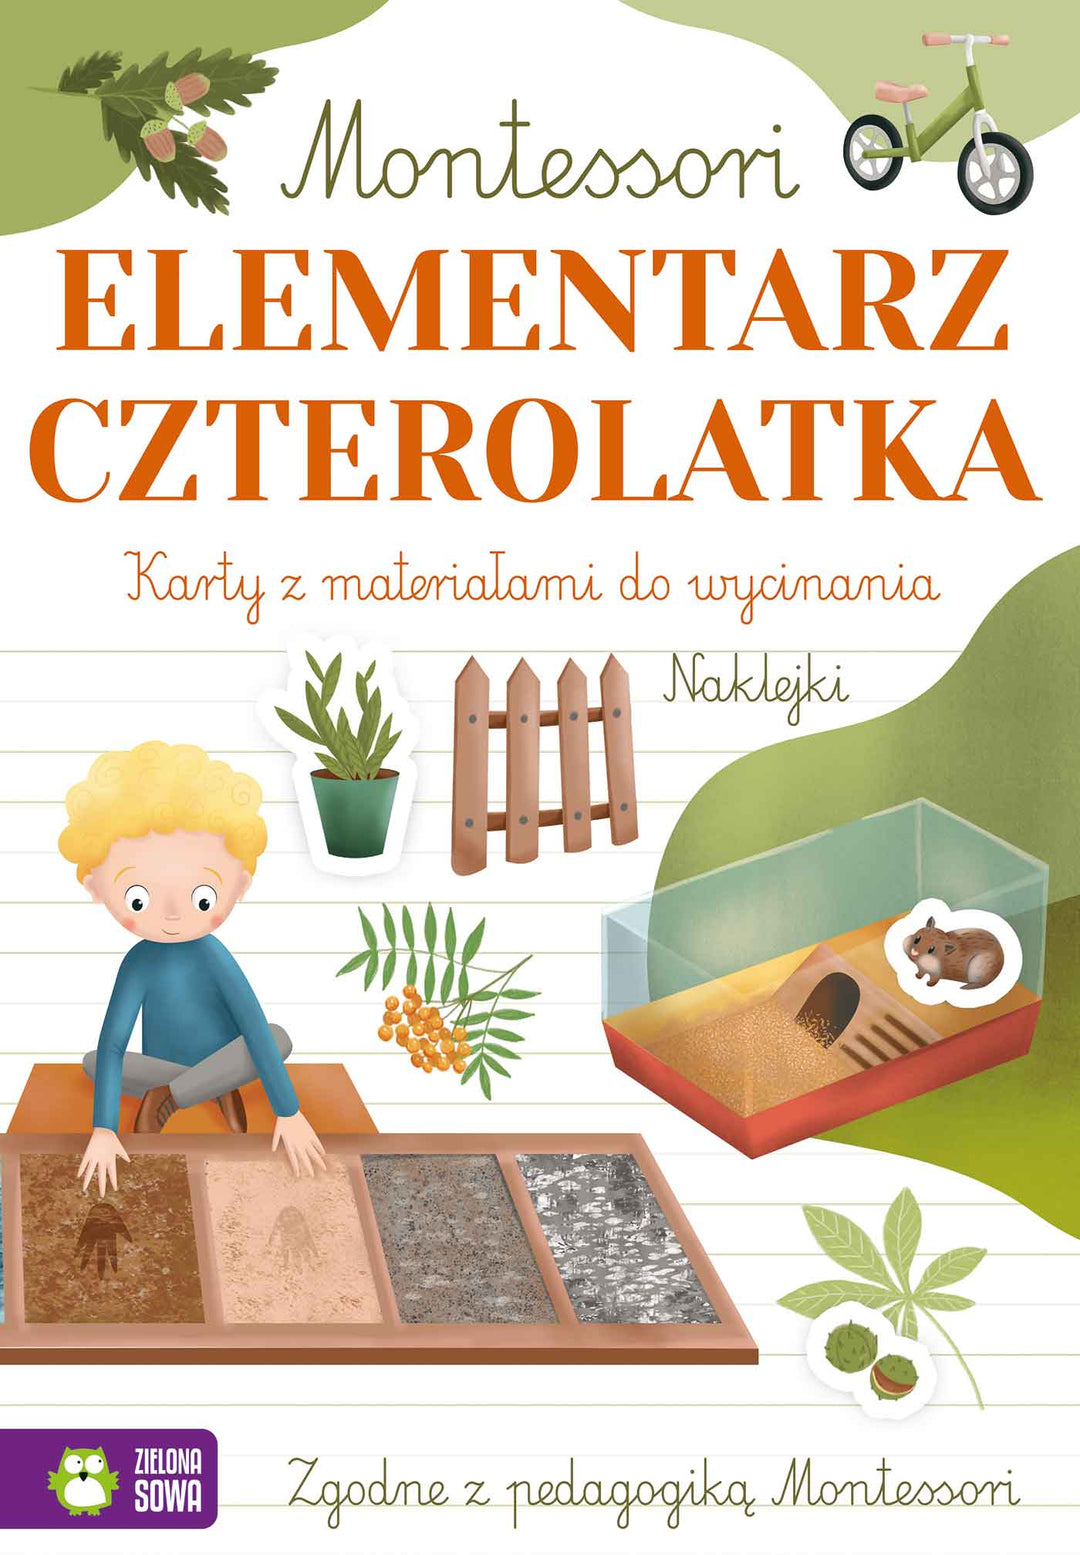 Zielona Sowa Elementarz czterolatka Montessori